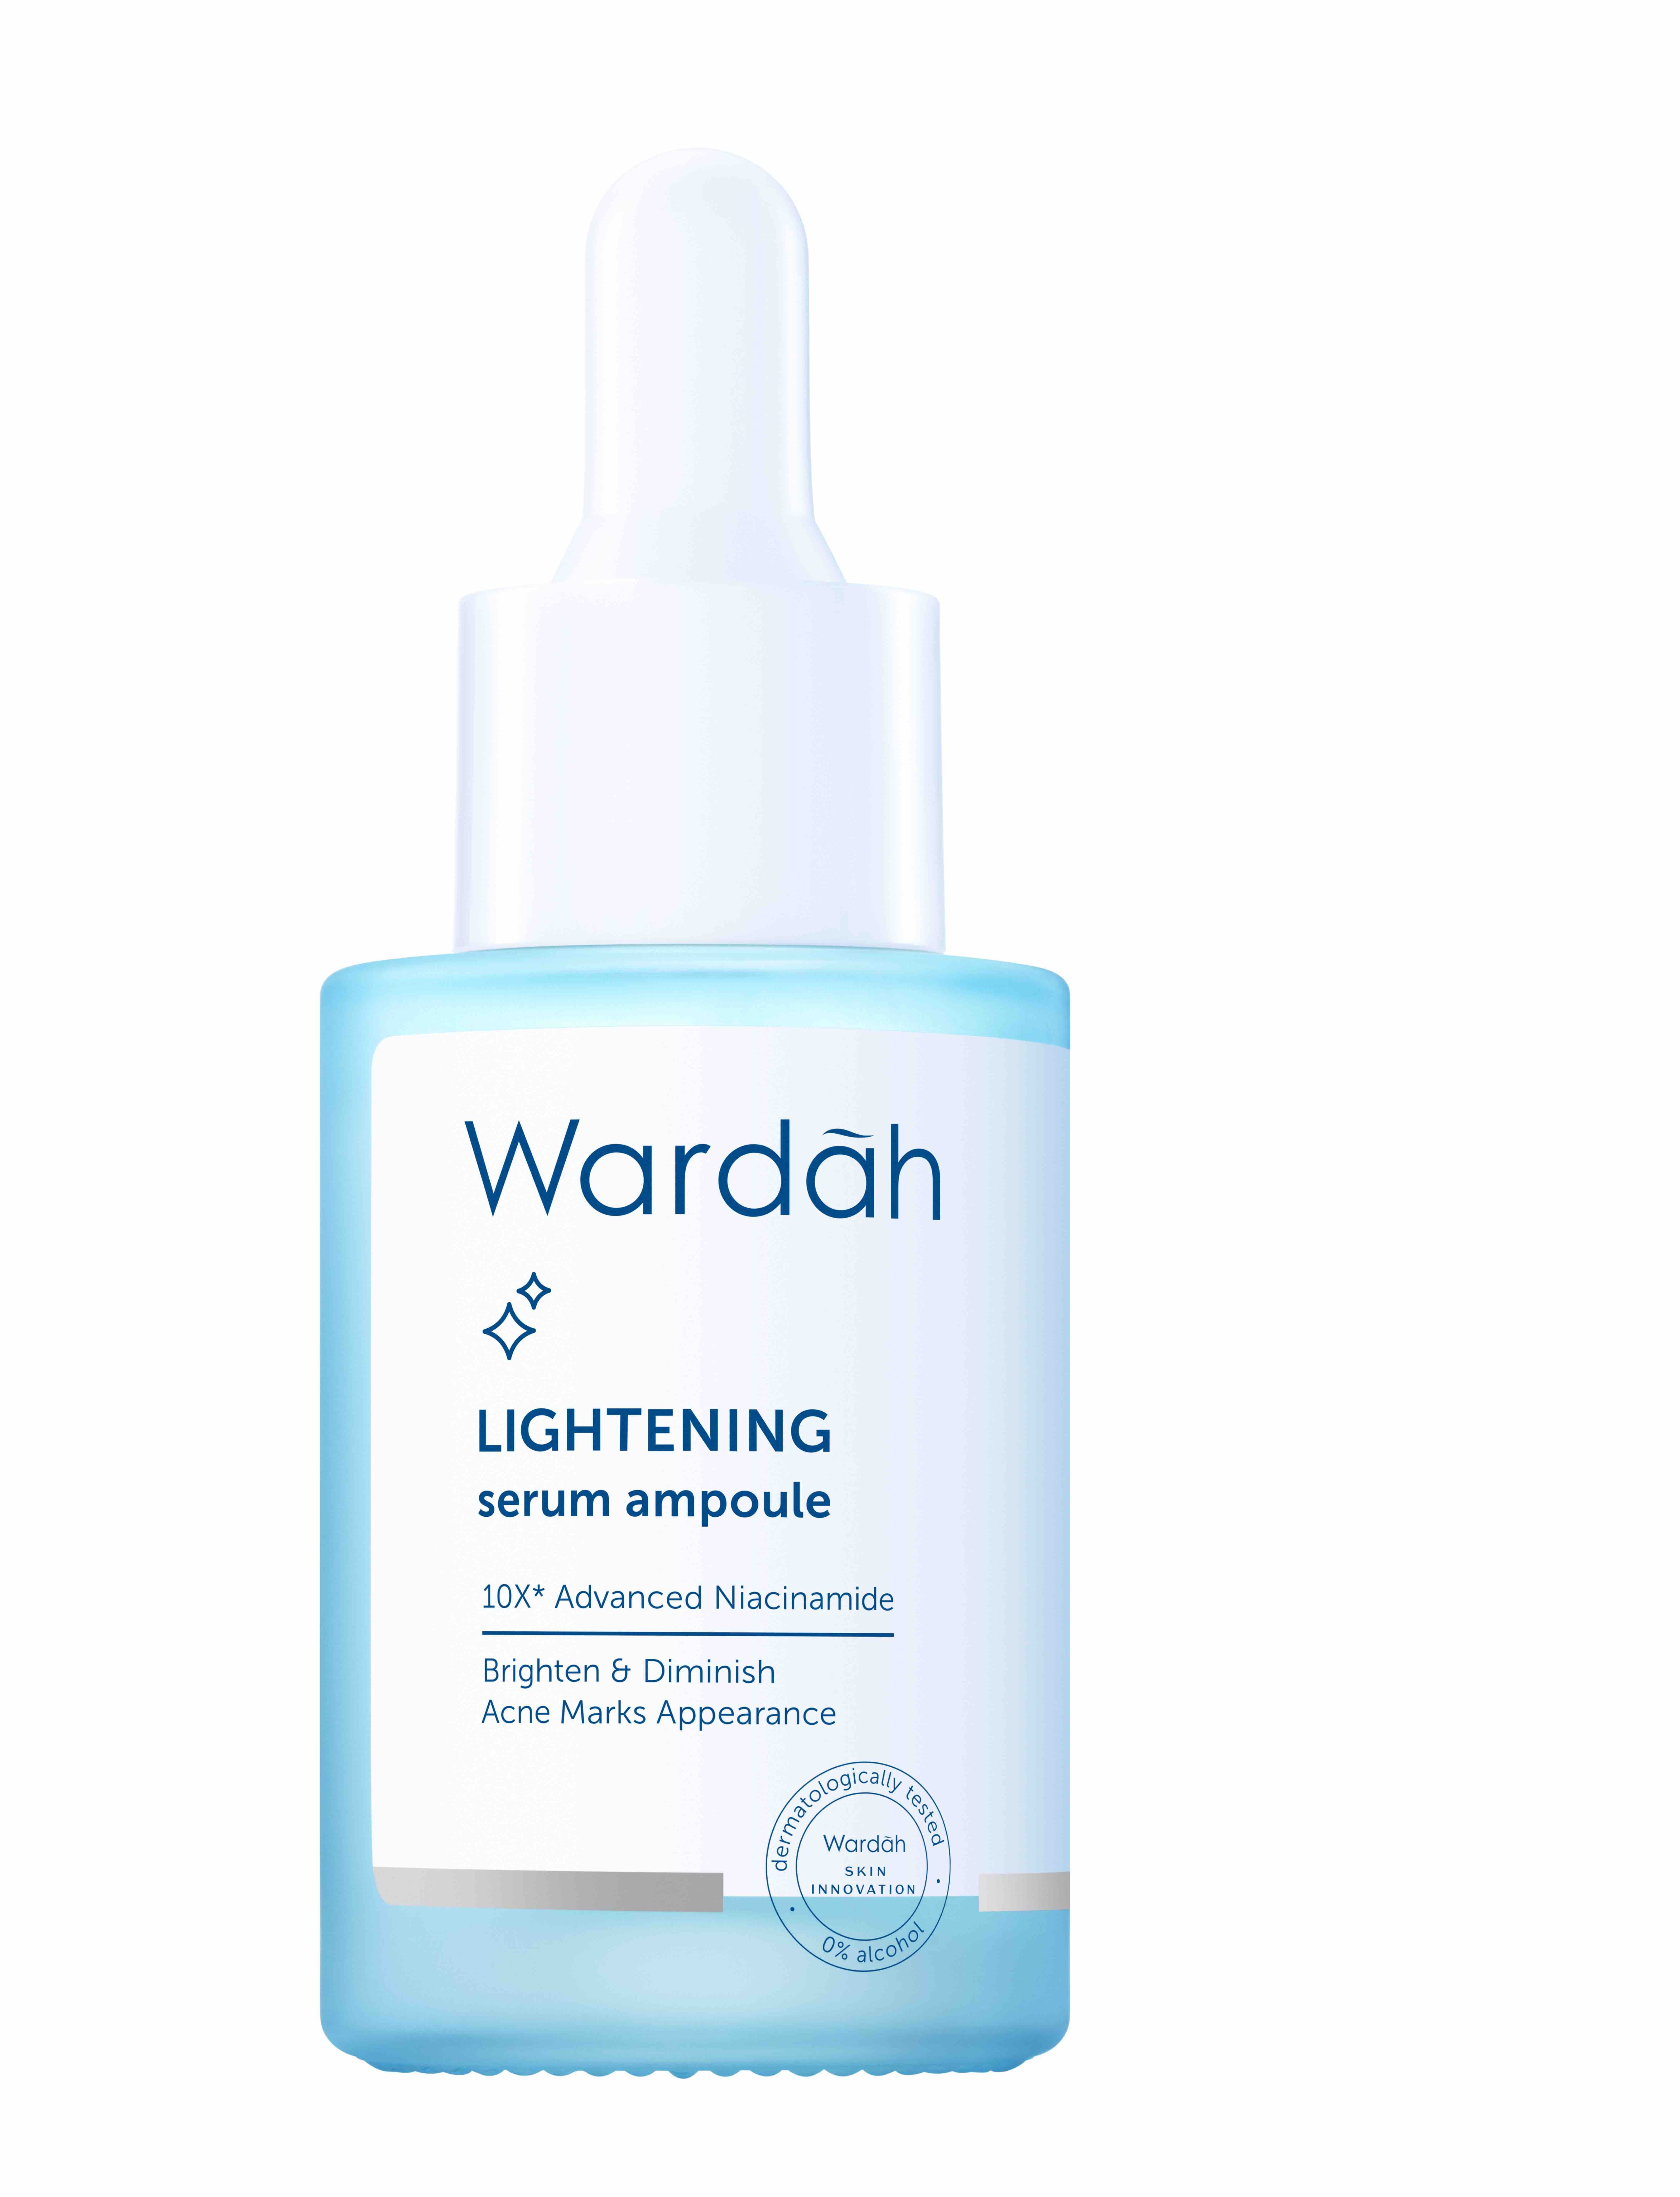 Serum wardah lightening